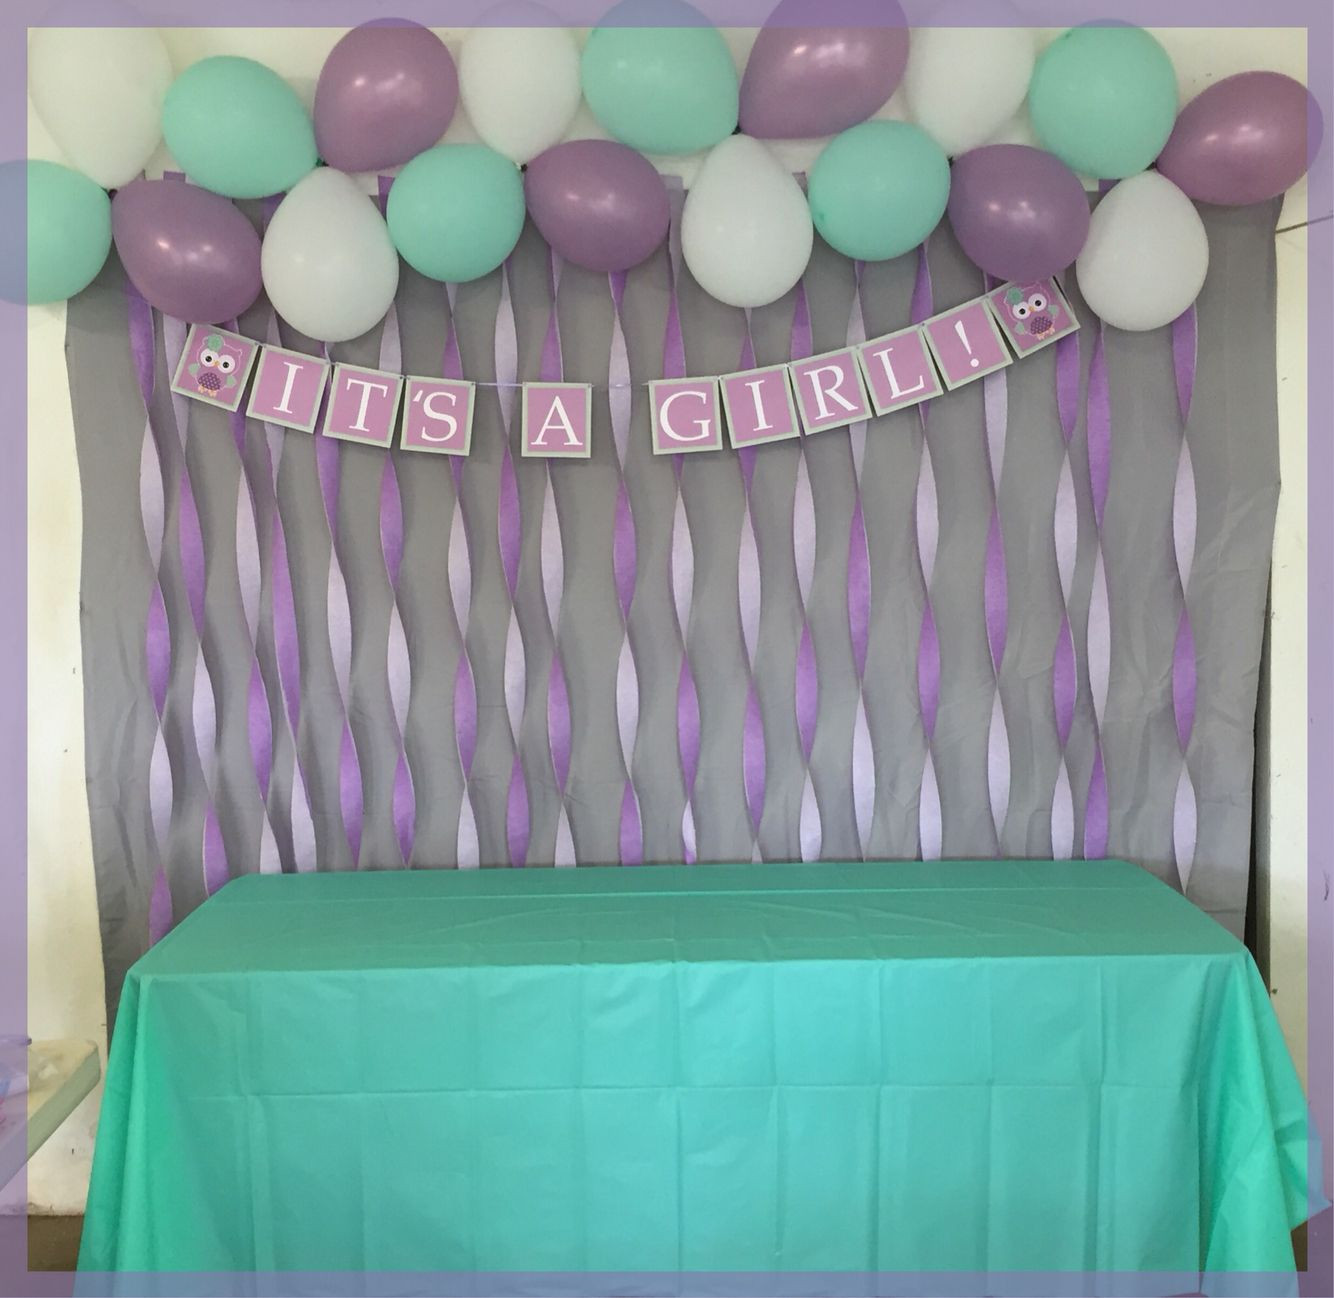 DIY Baby Shower Decorations For Girls
 Best 25 Diy baby shower decorations ideas on Pinterest